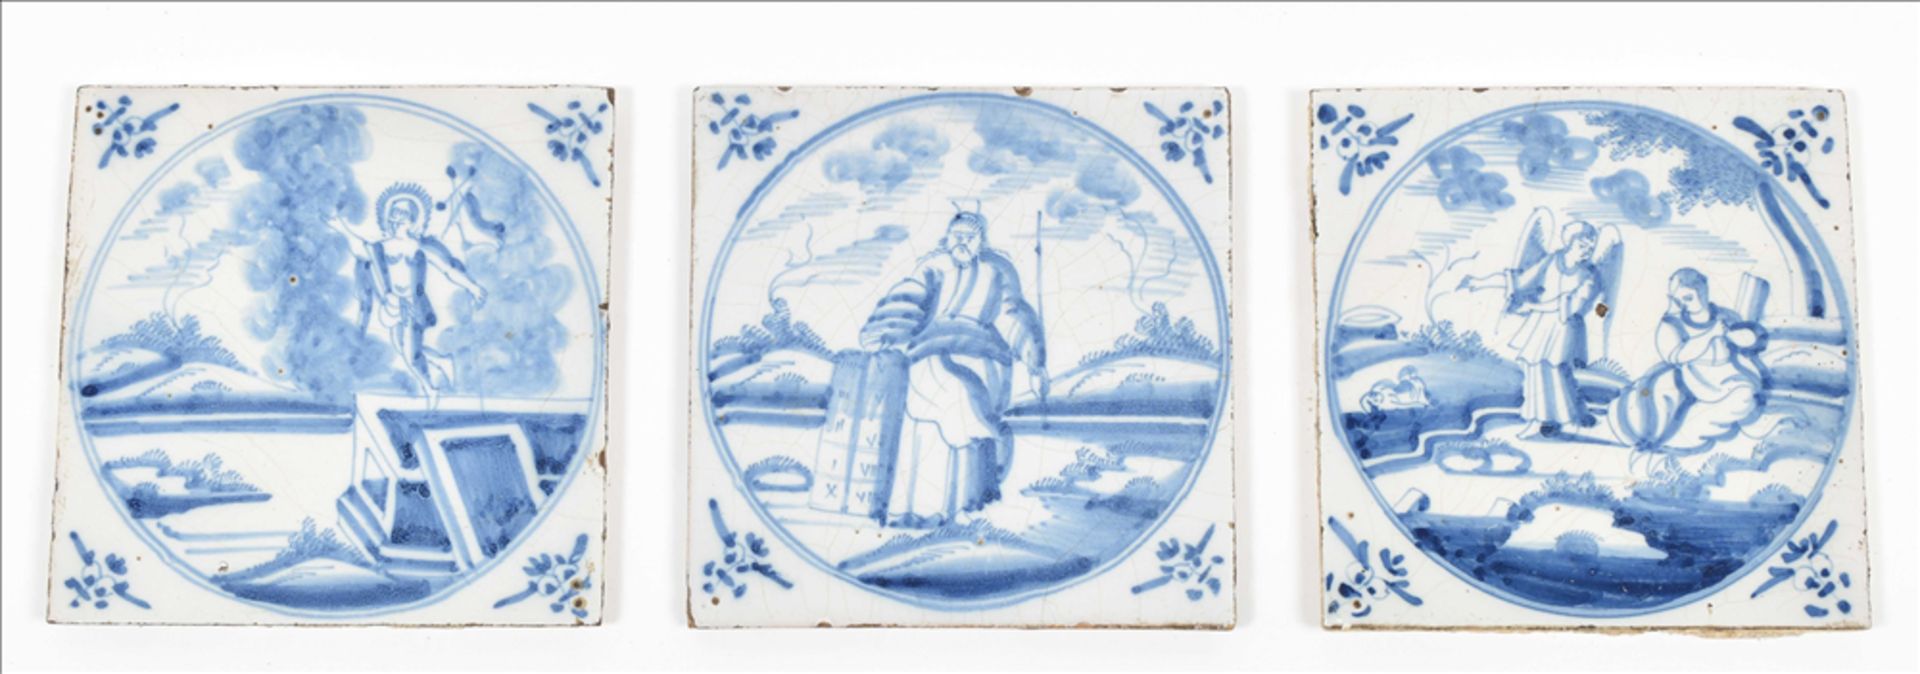 Nine Dutch tiles with biblical scenes - Image 2 of 7